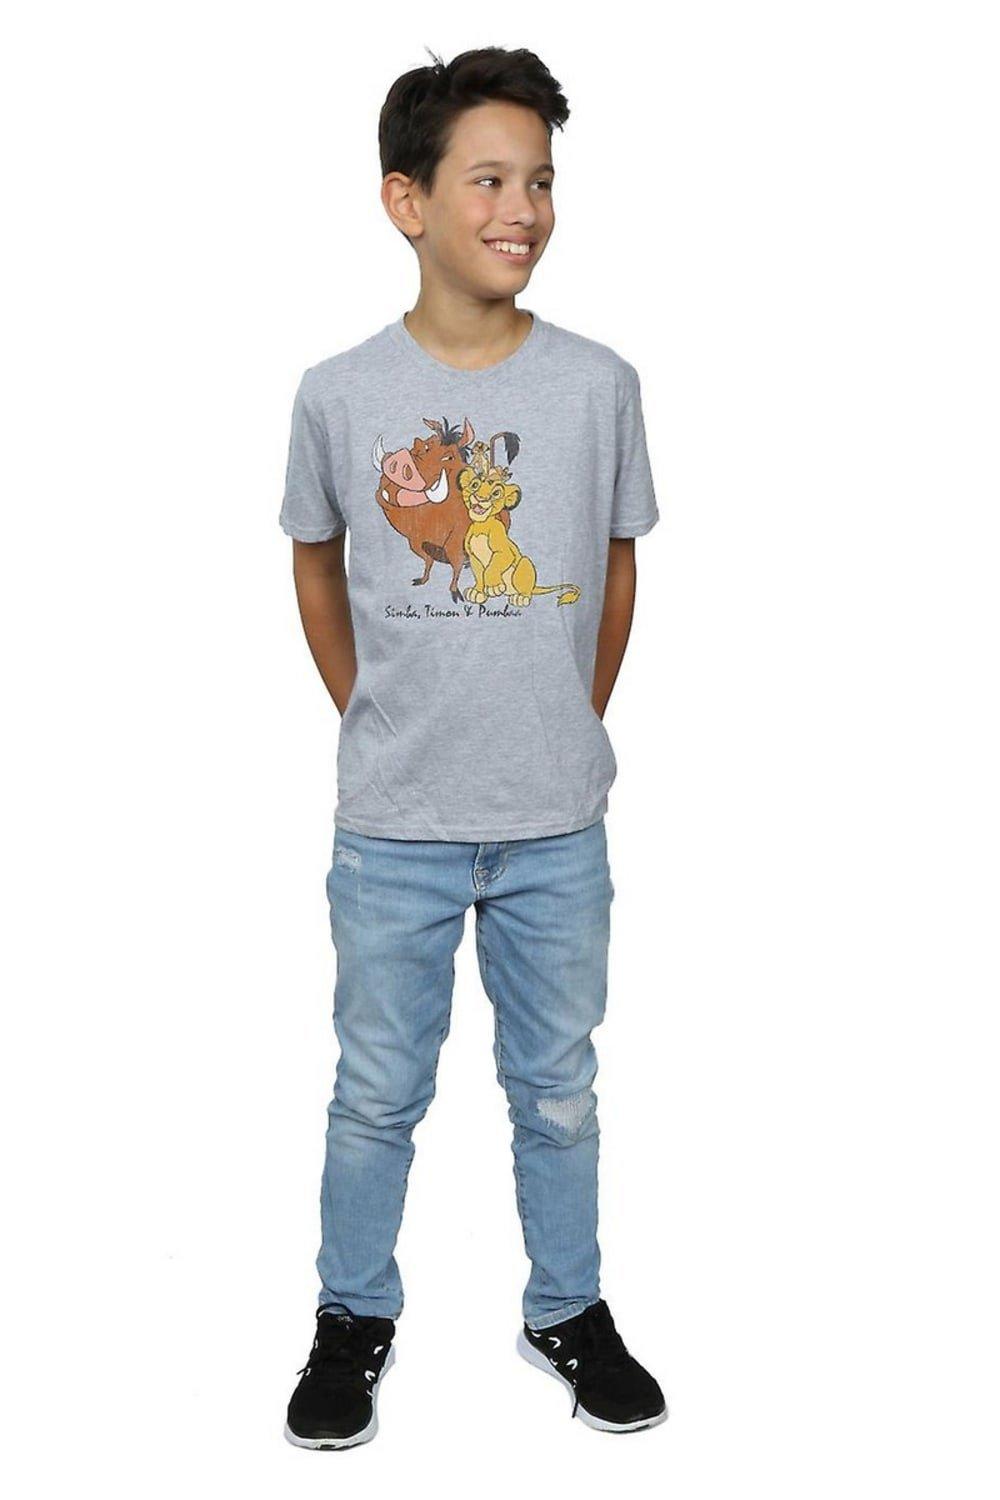 Classic Simba Timon & Pumba T-Shirt